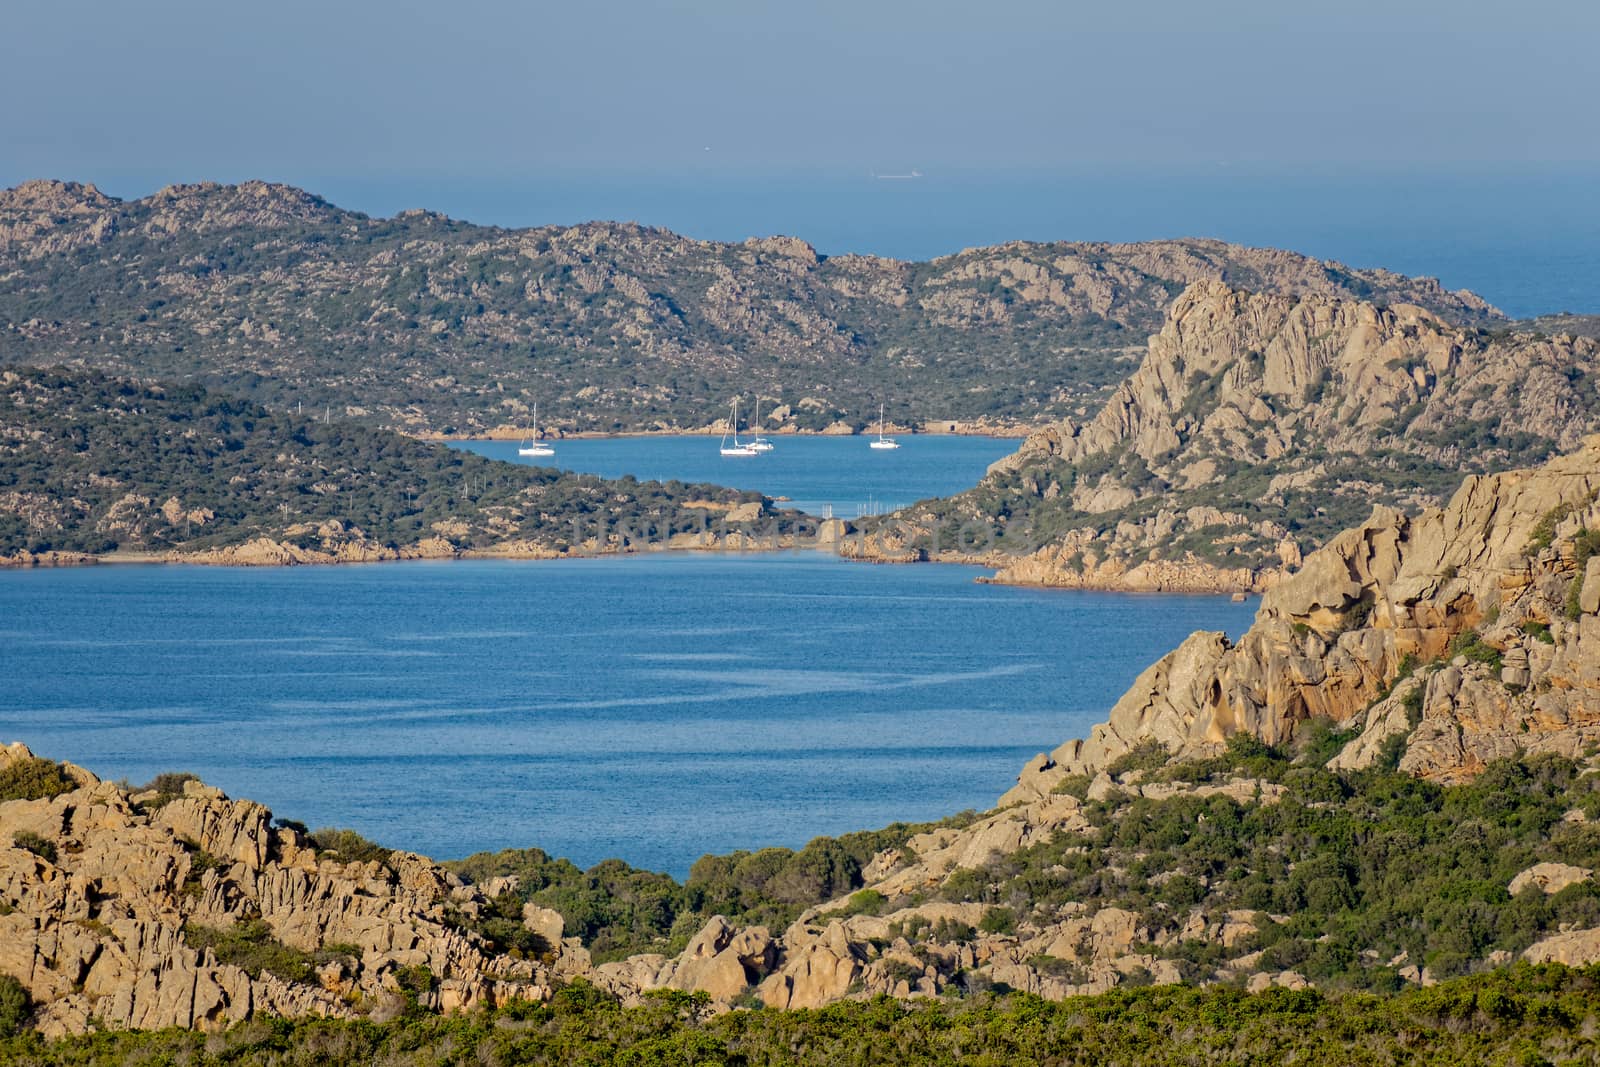 View form Palau in Sardinia by phil_bird